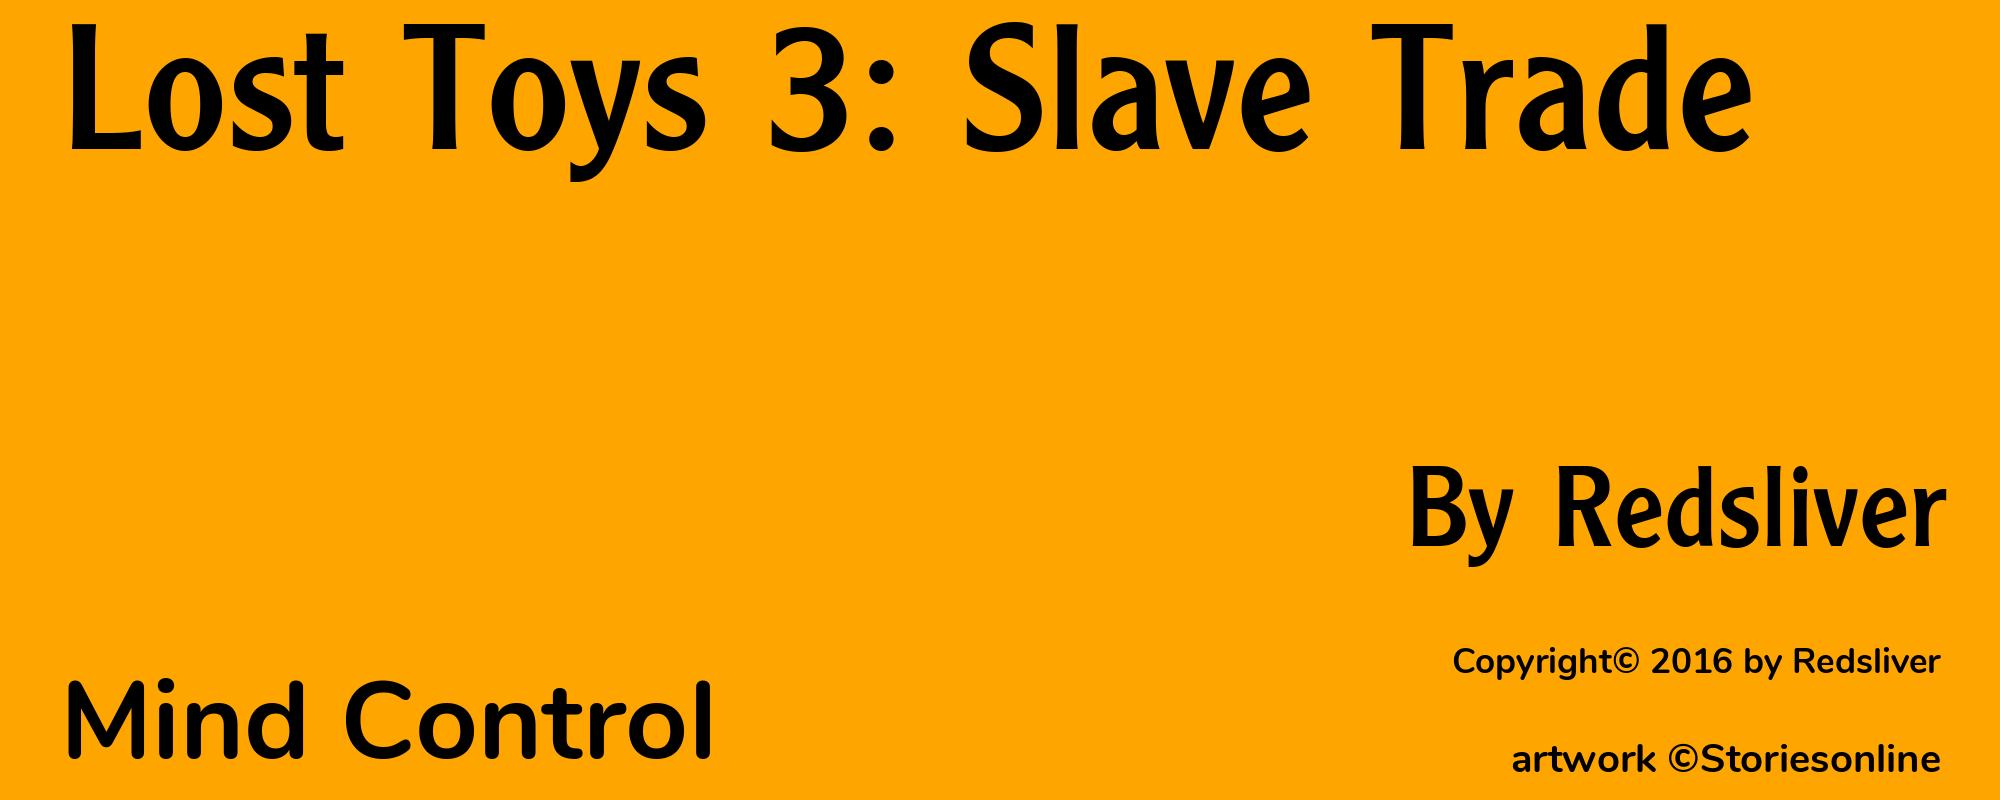 Lost Toys 3: Slave Trade - Cover